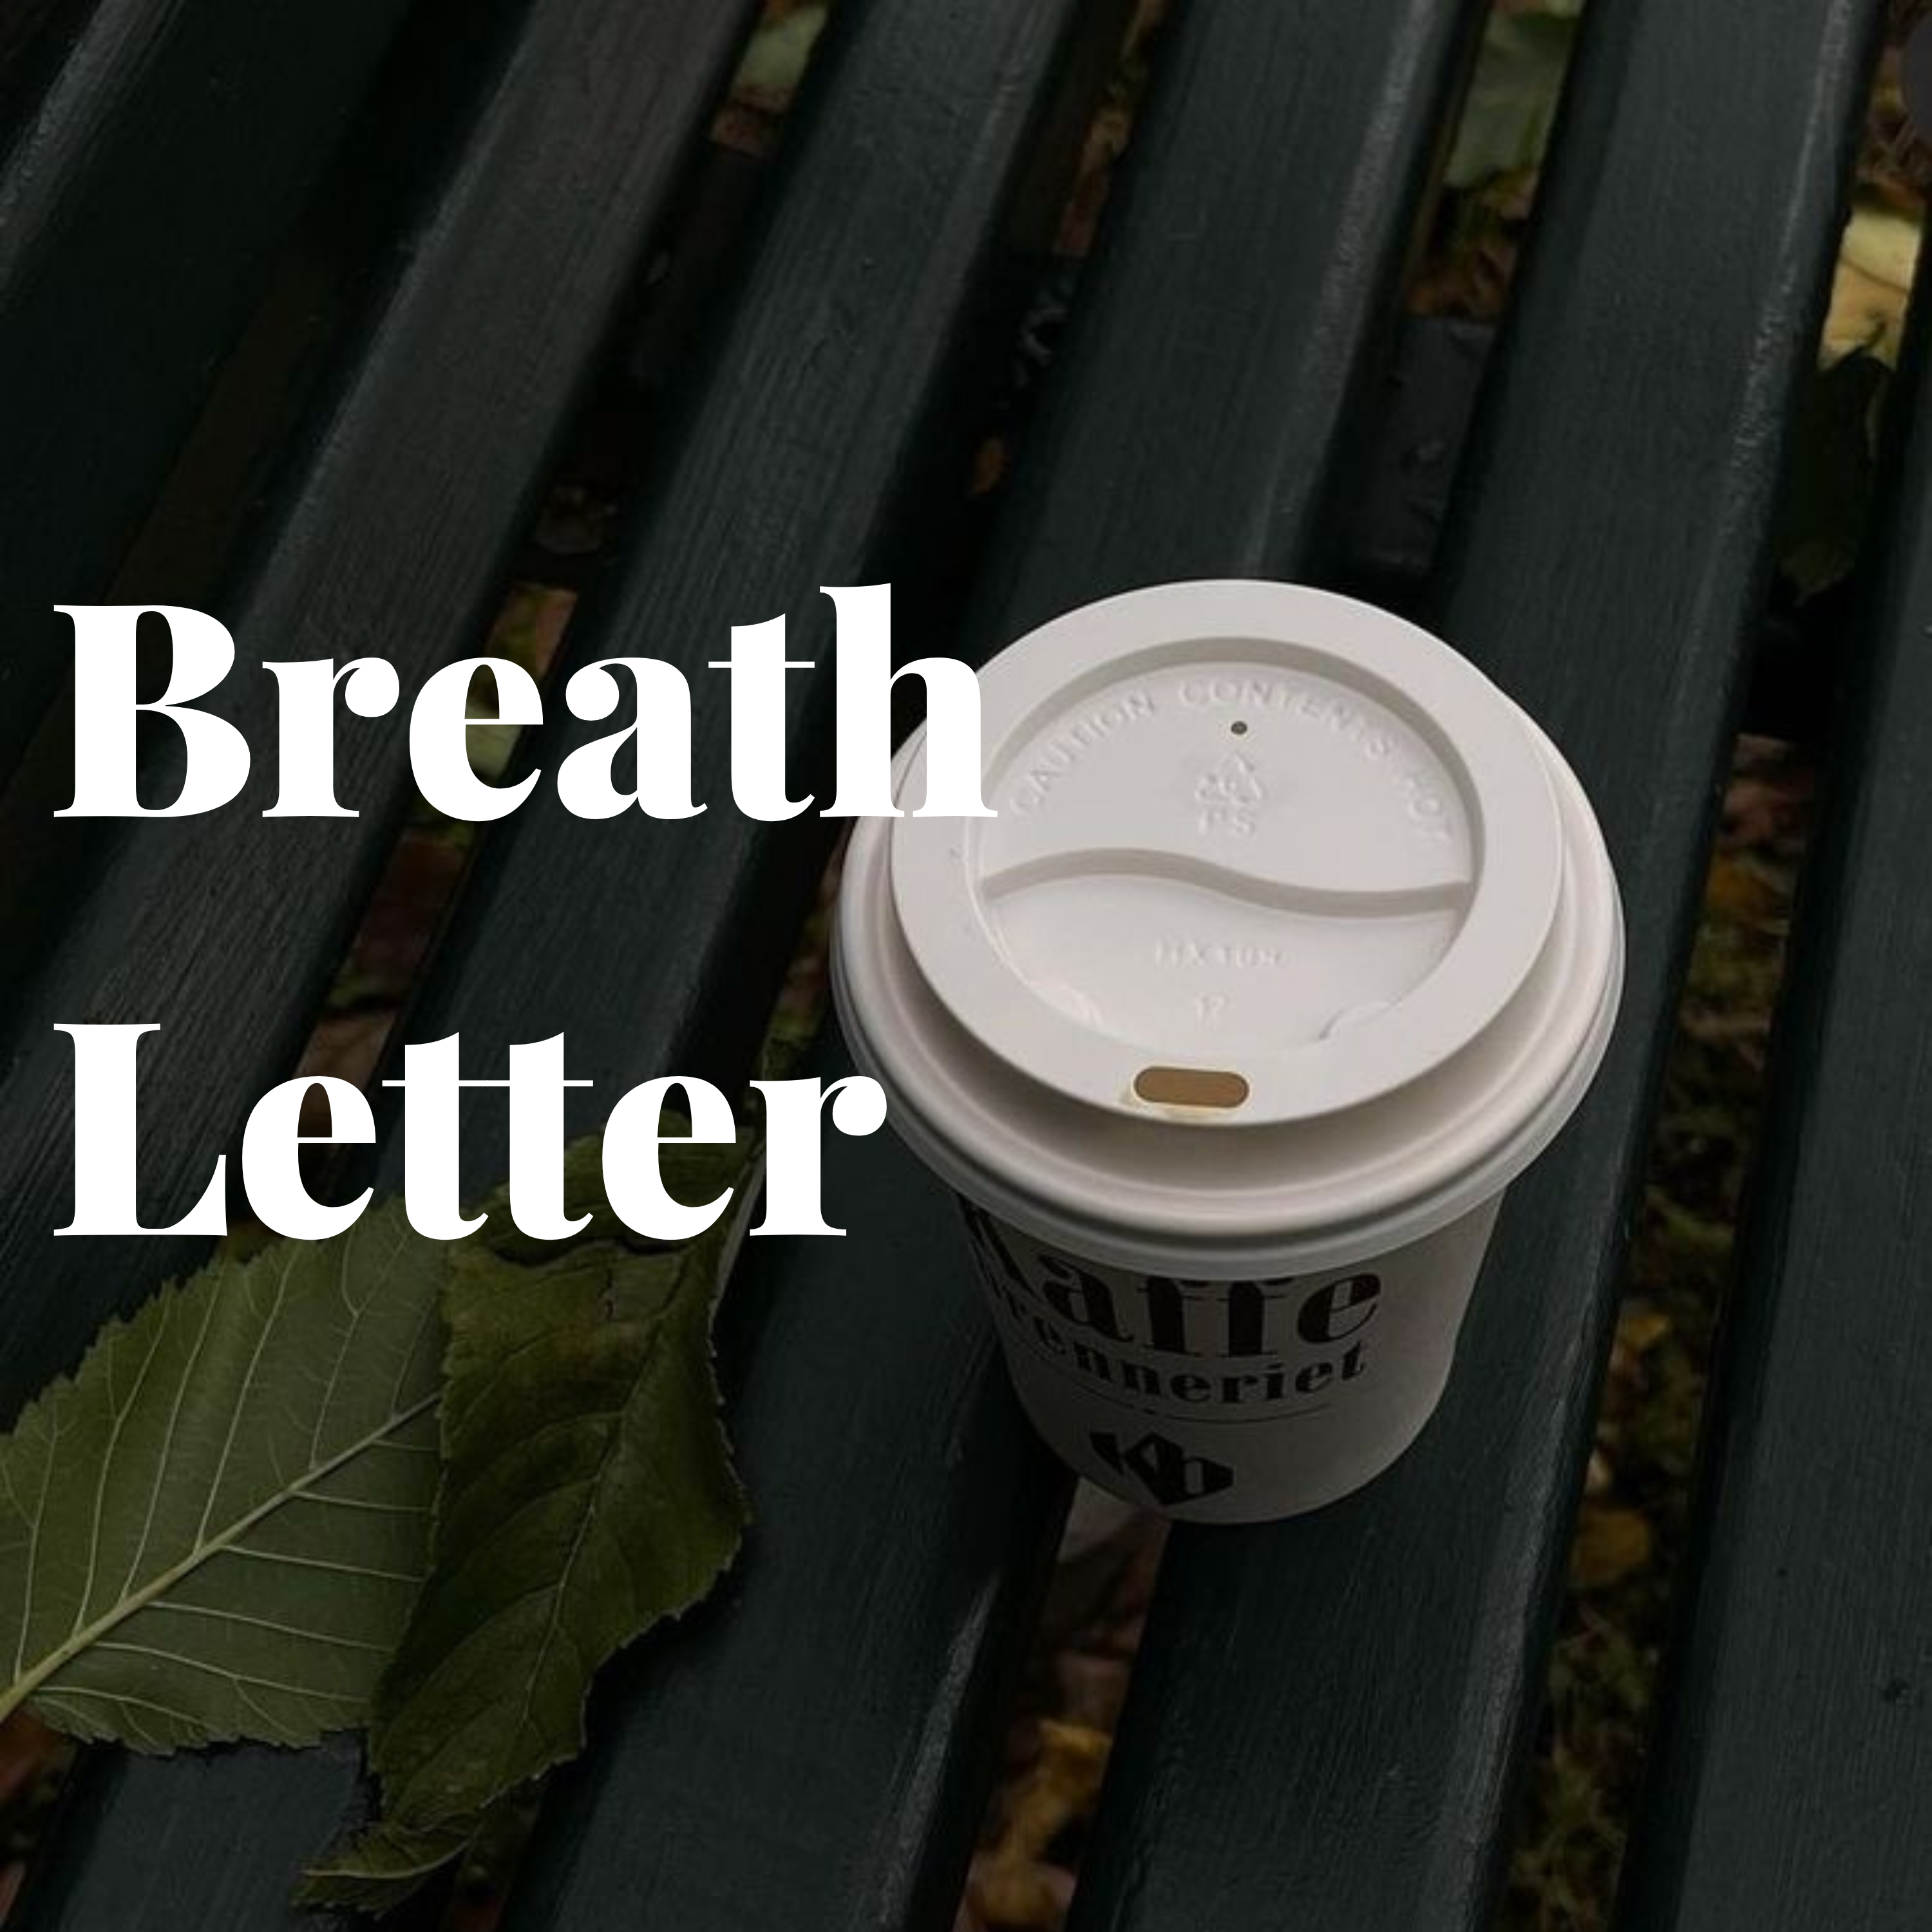 Breath Letter Anmeldung